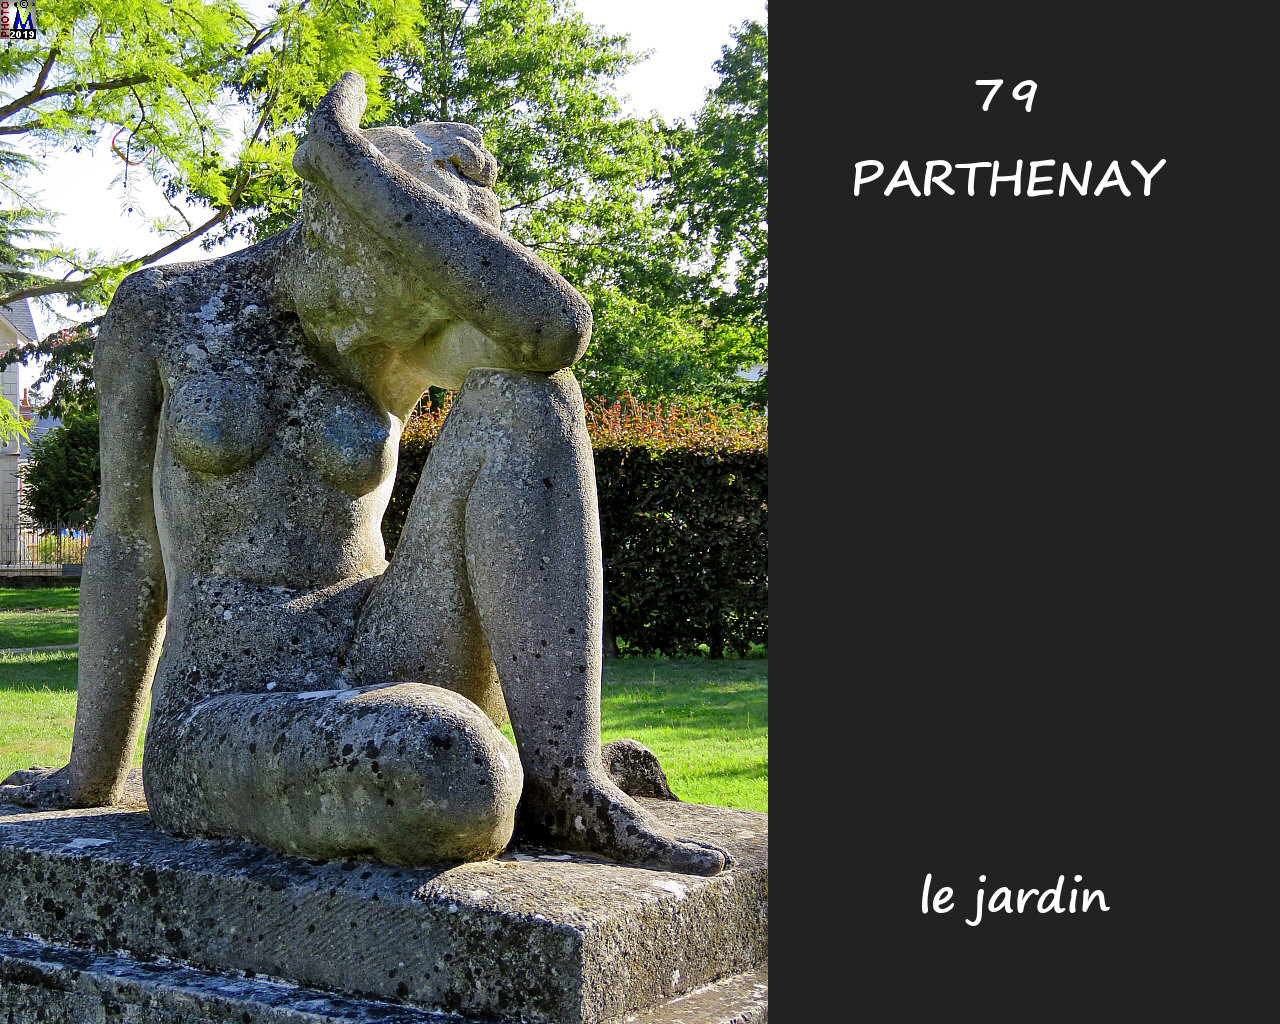 79PARTHENAY_jardin_1014.jpg